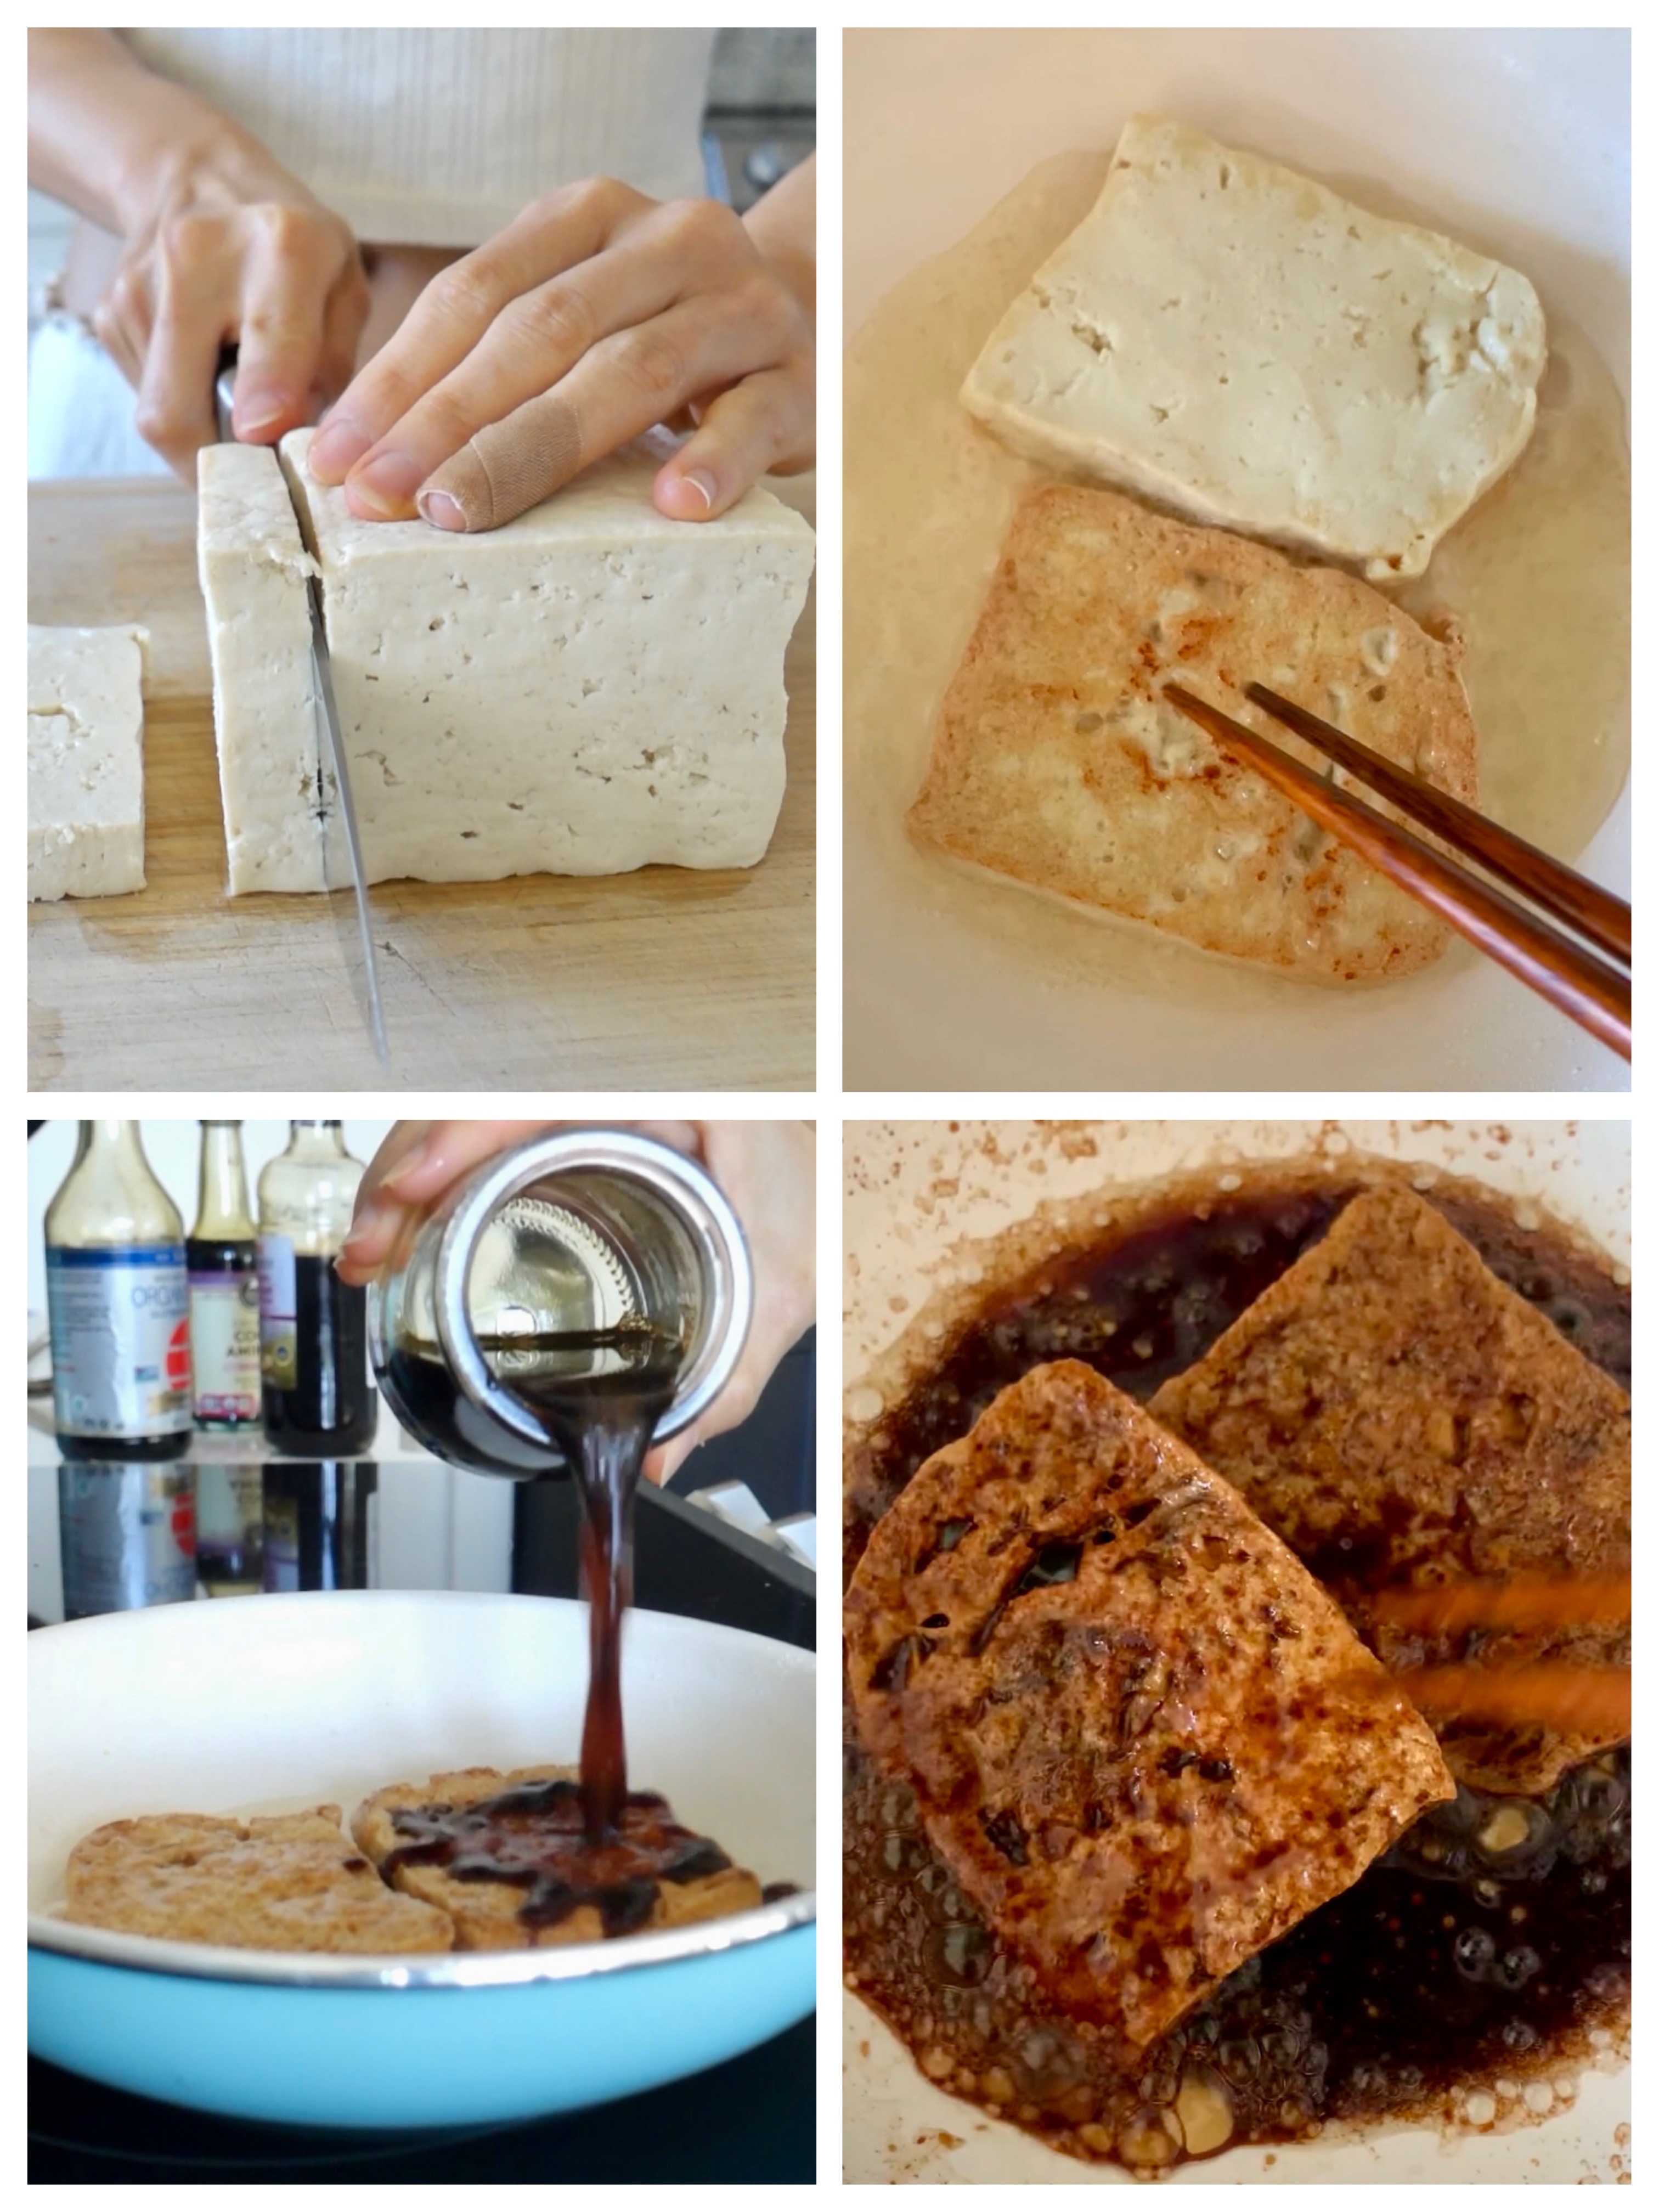 Onigirazu (Sushi Sandwich) using the Tortilla Hack - Veggie Anh